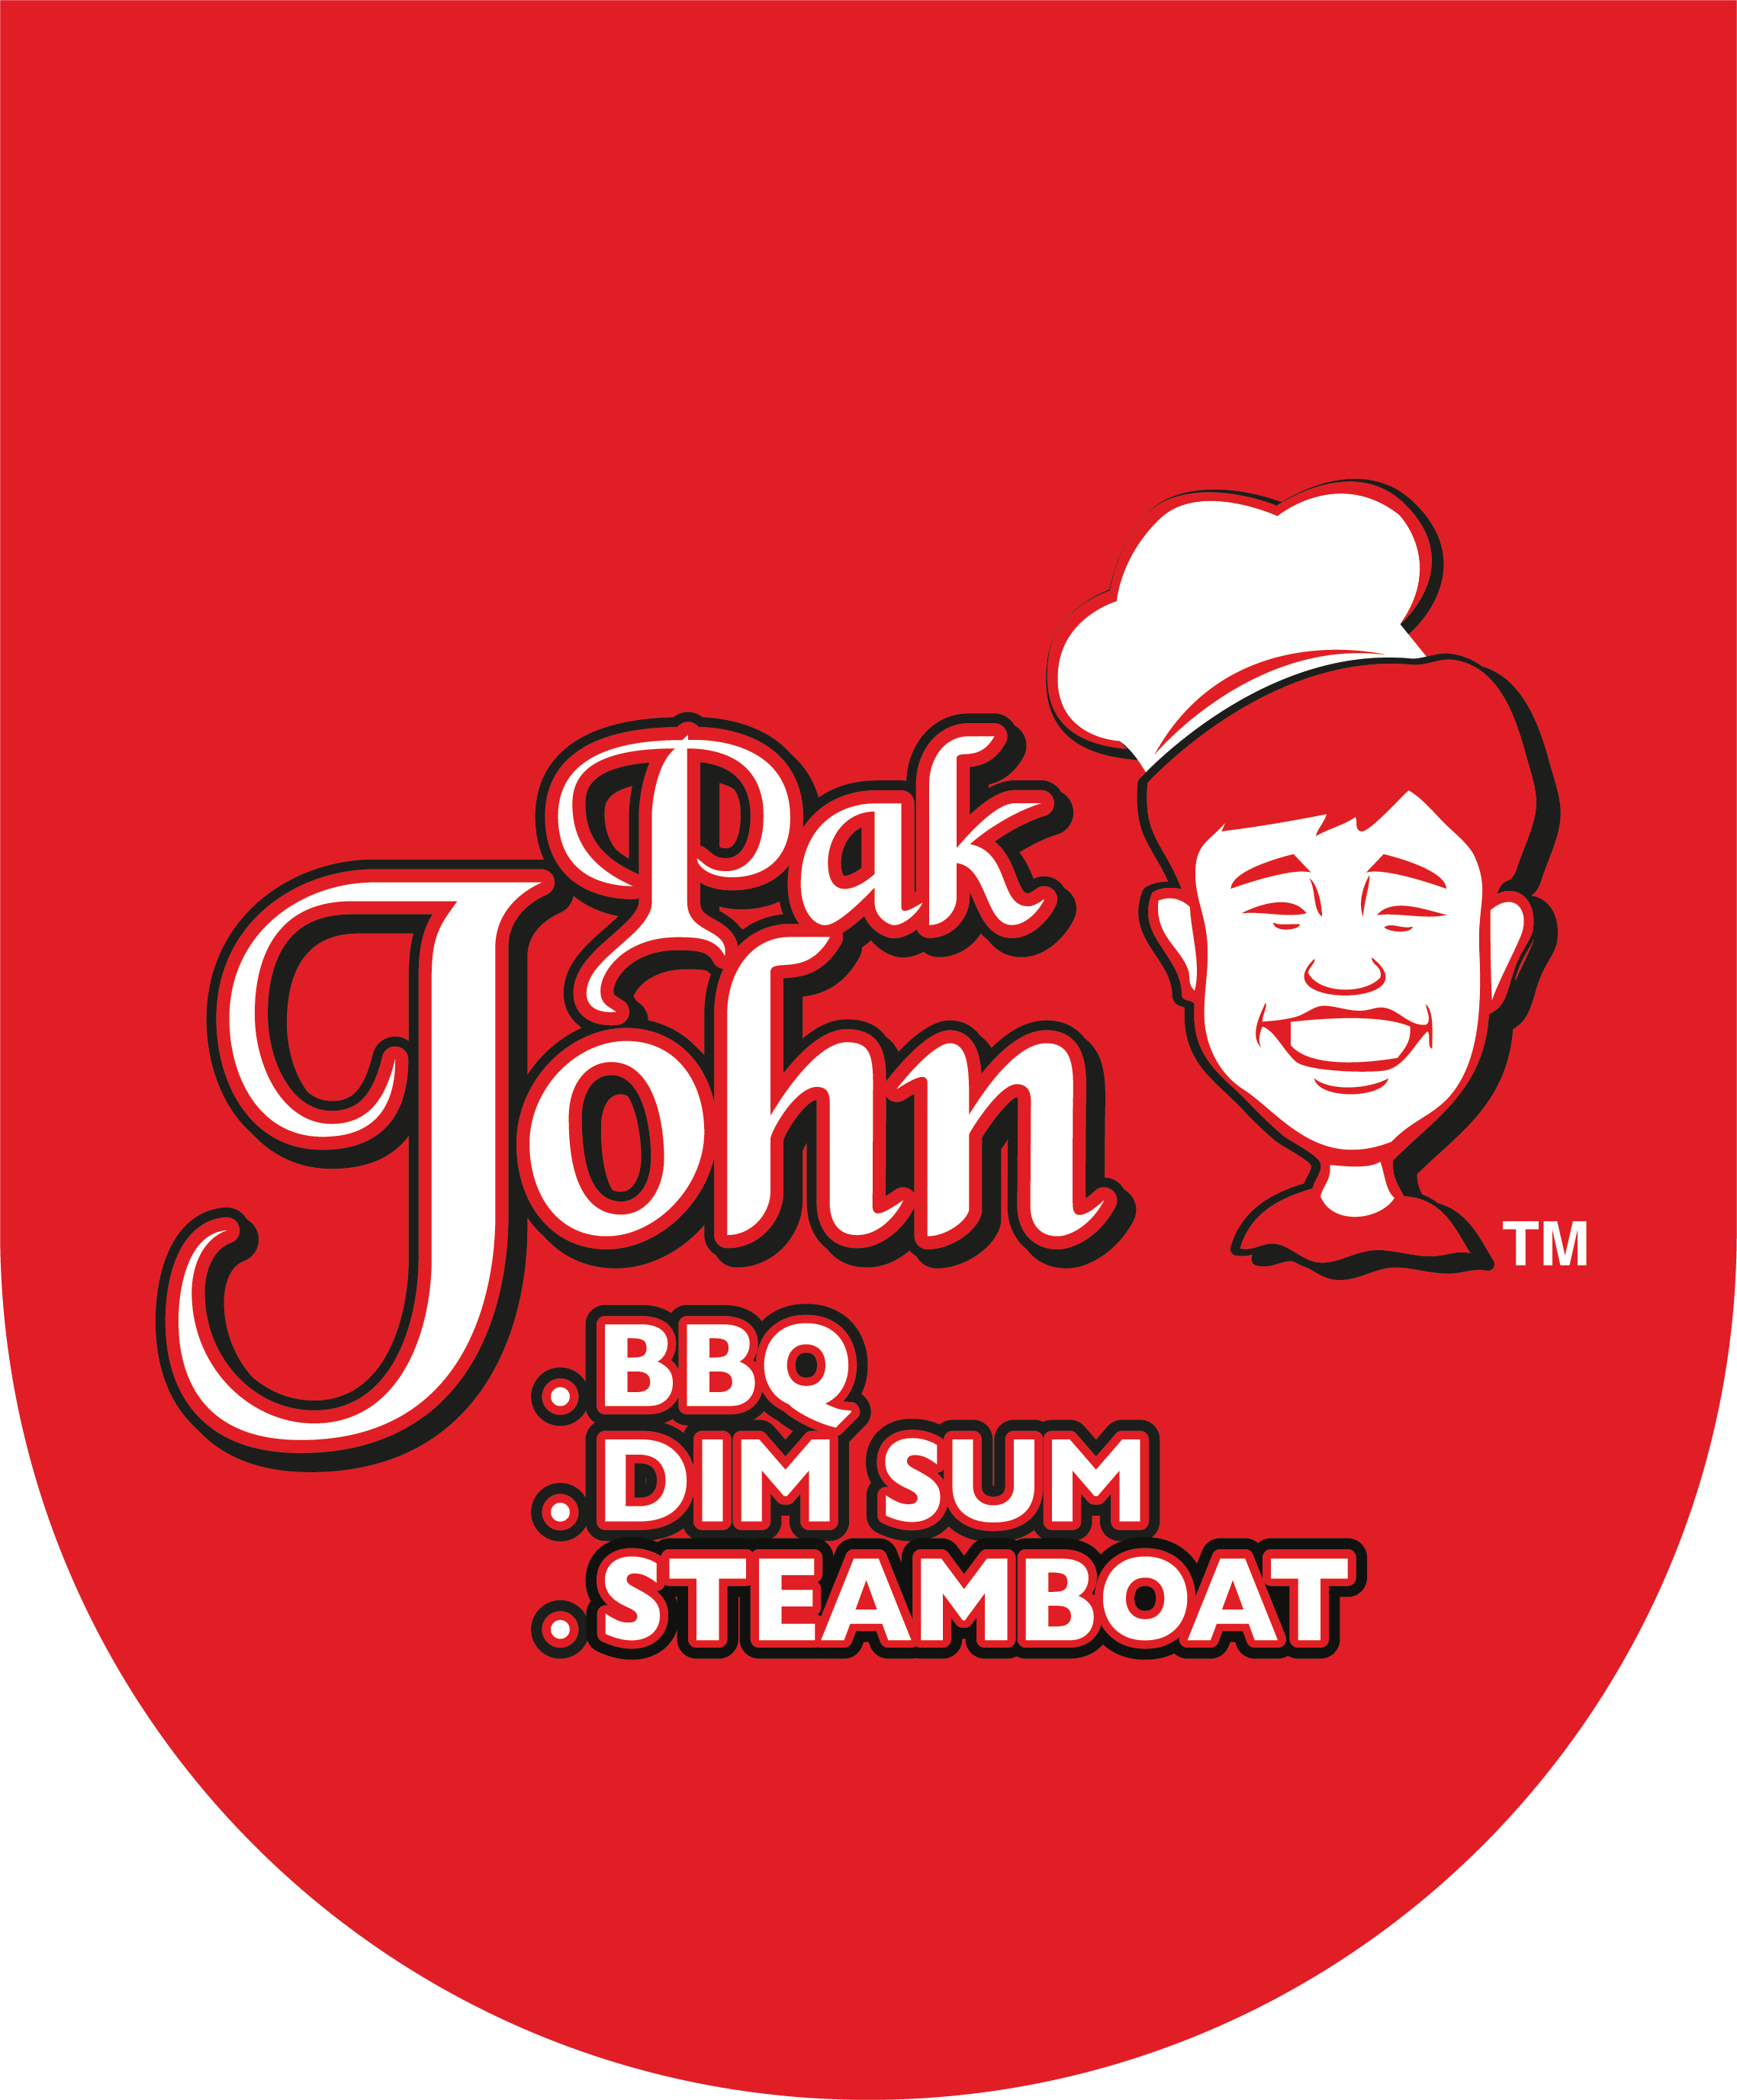 PAK JOHN STEAMBOAT, DIMSUM & BBQ